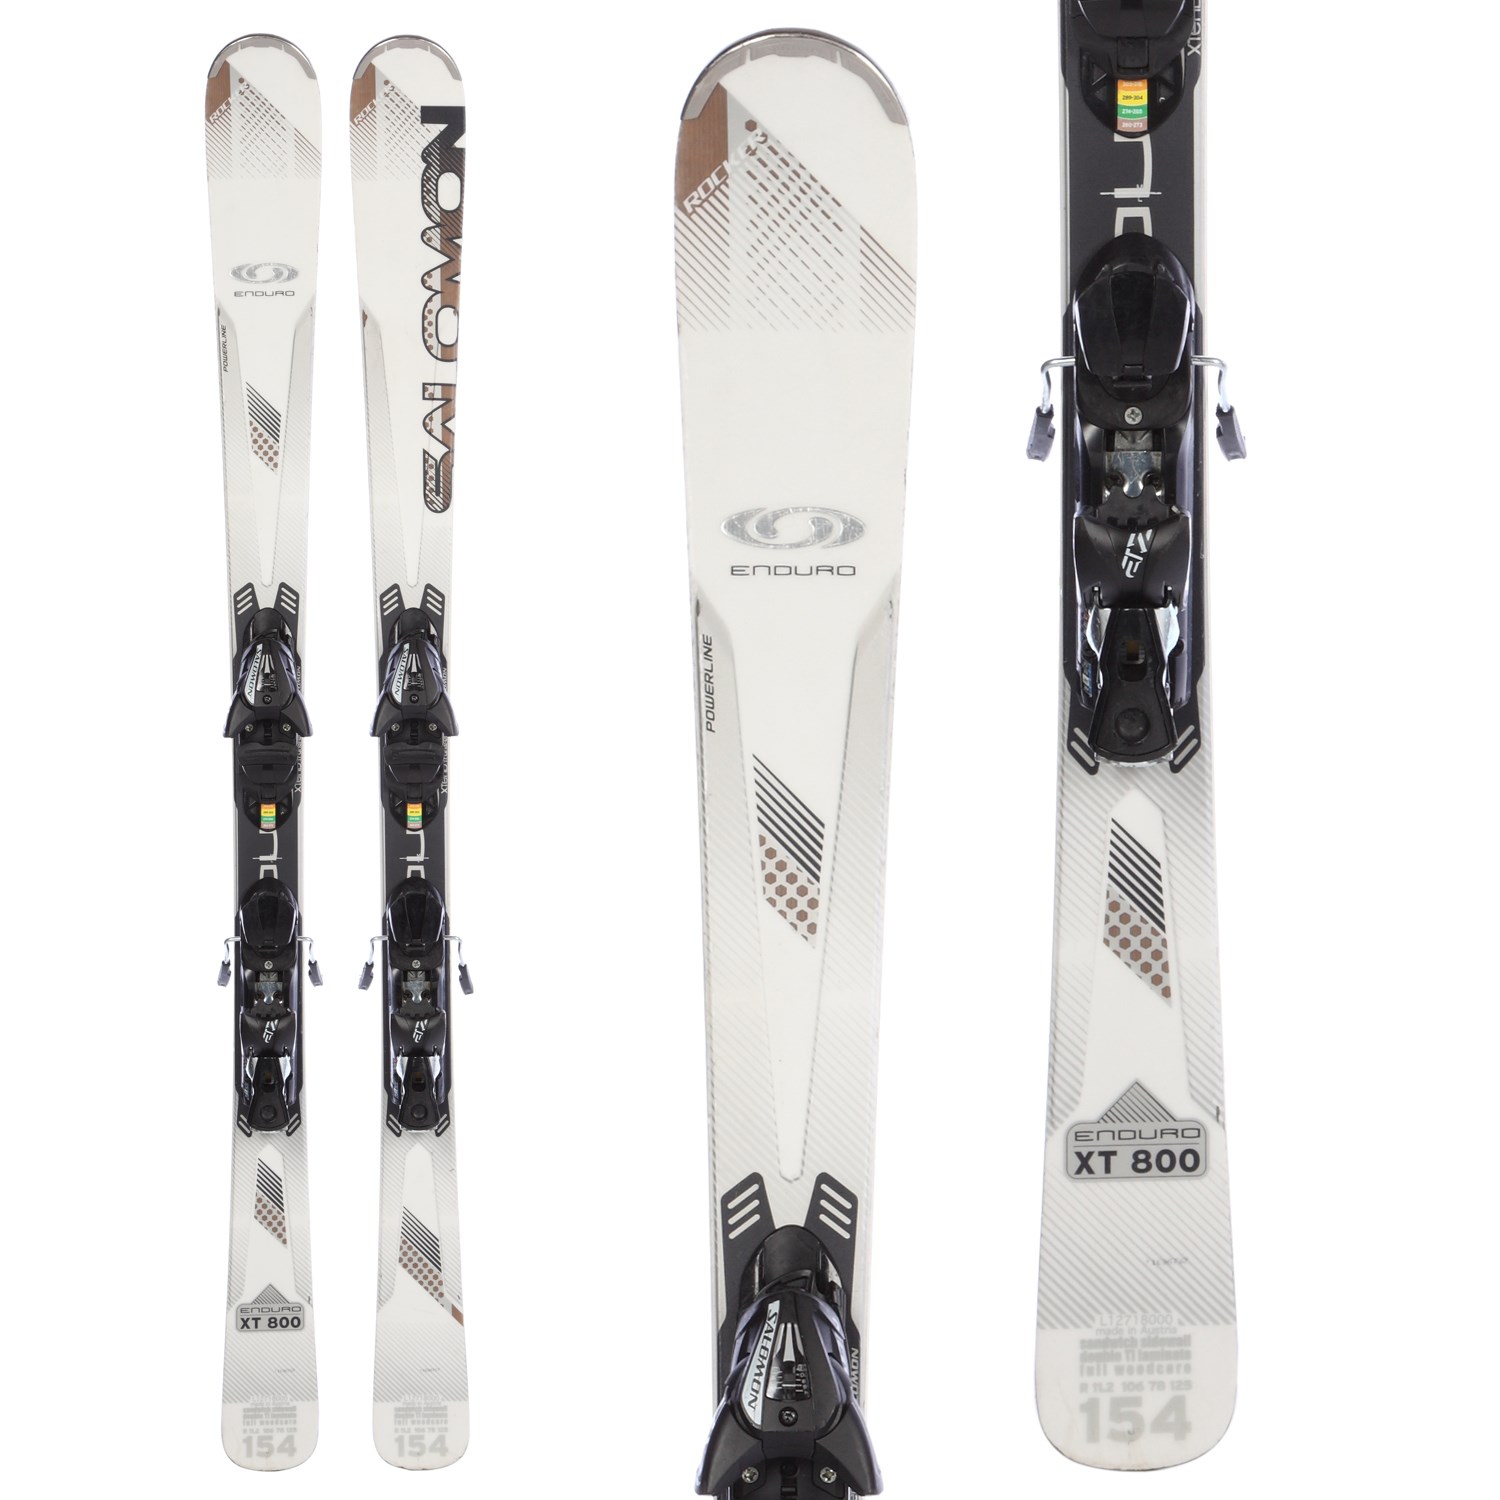 Salomon Enduro XT 800 Skis + Z12 Demo Bindings - Used 2012 - Used